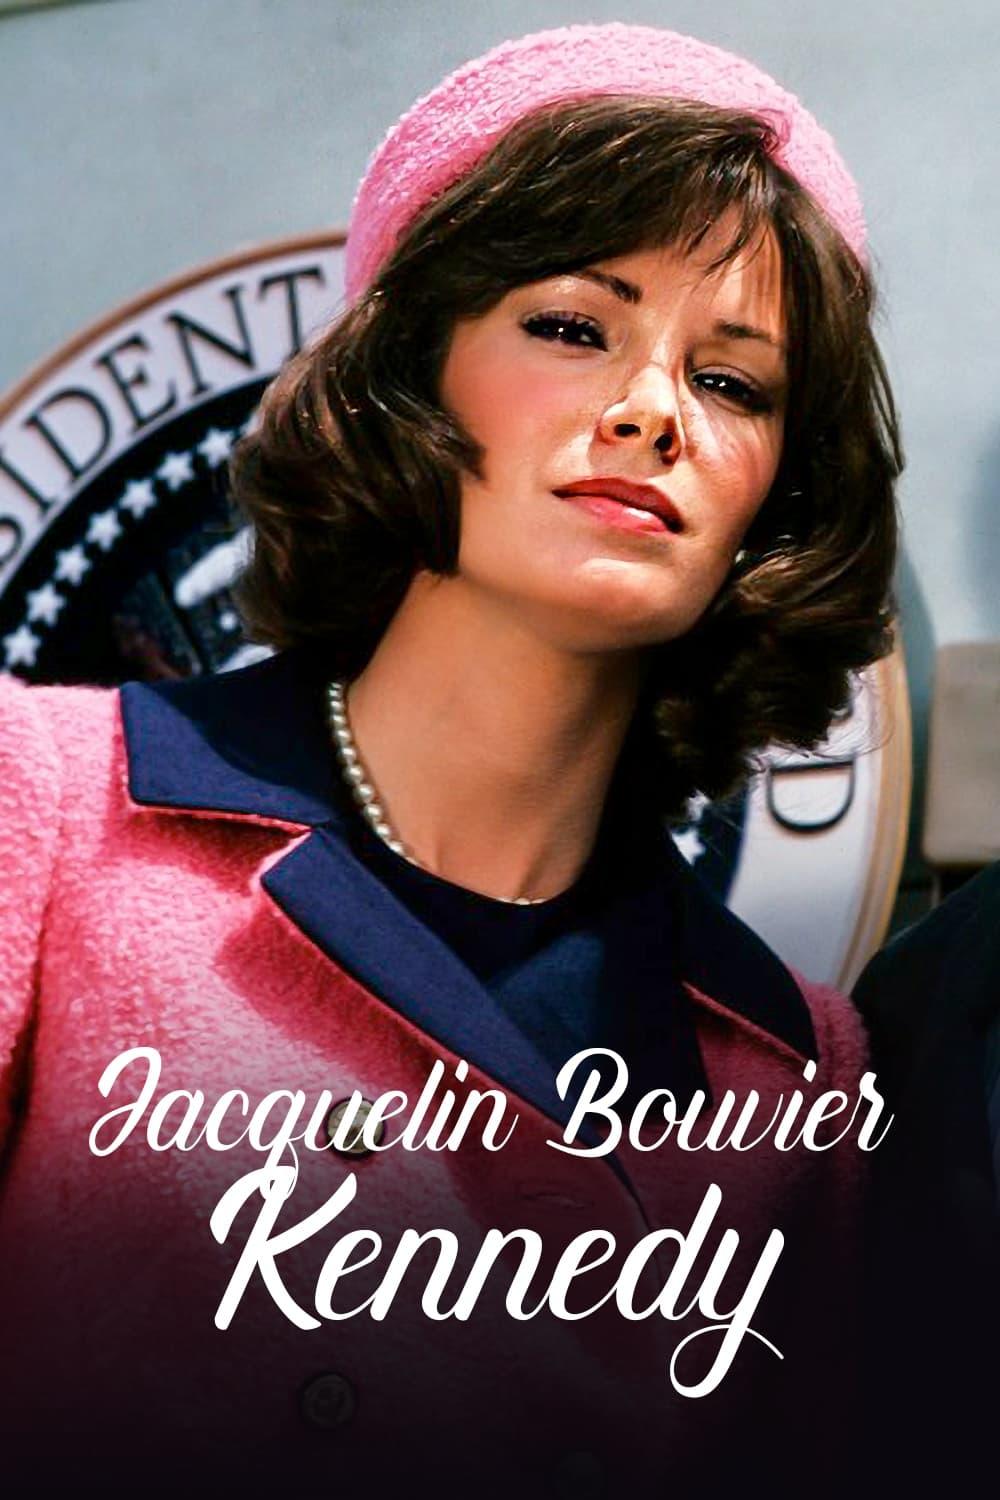 Jacqueline Bouvier Kennedy poster